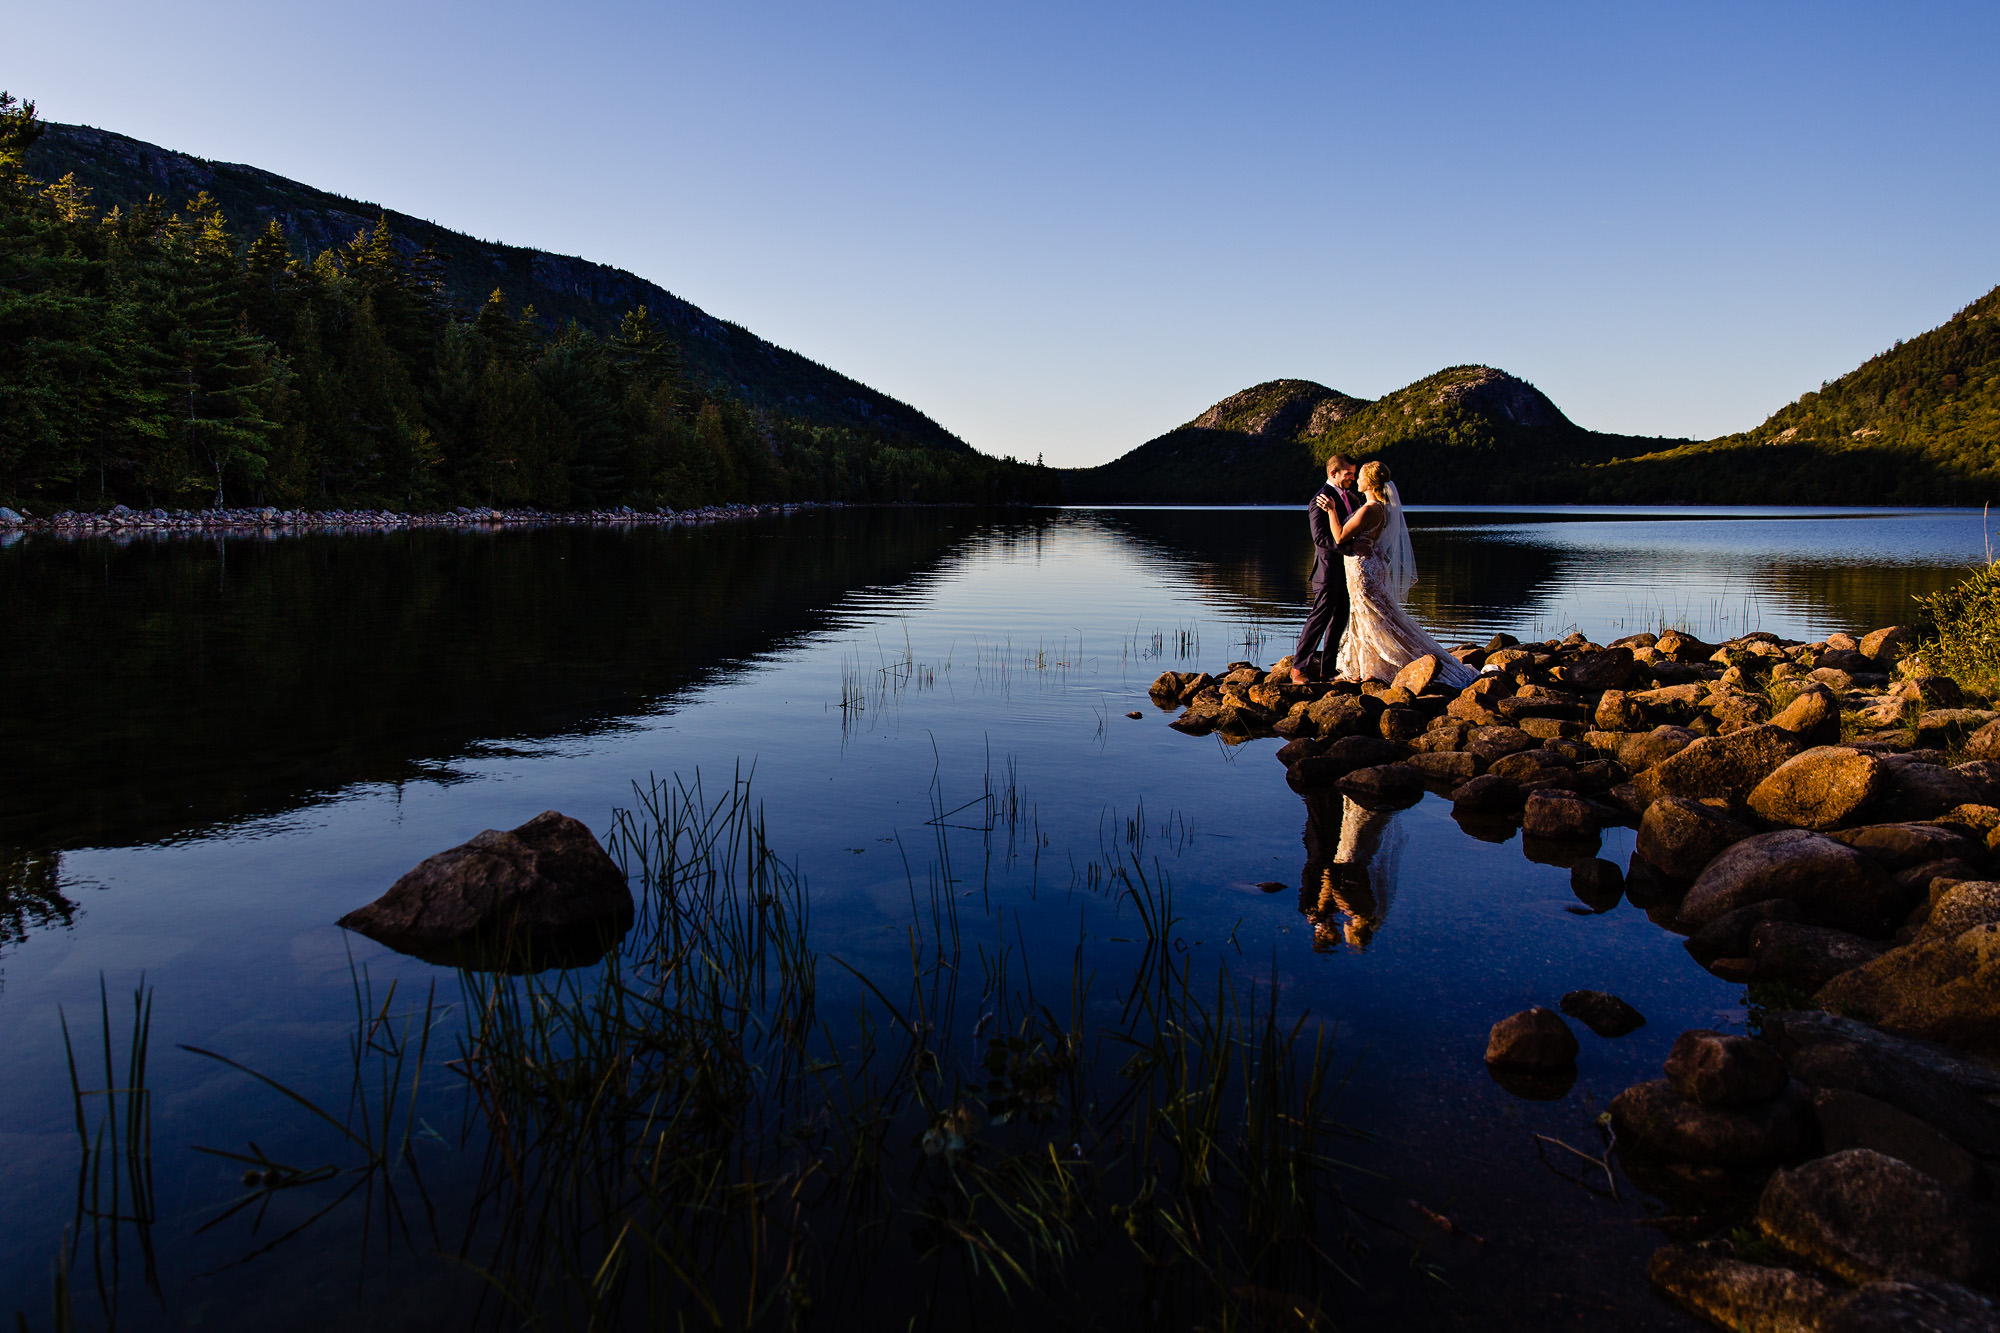 A beautiful wedding portrait taken at Jordan Pond during an elopement in Acadia